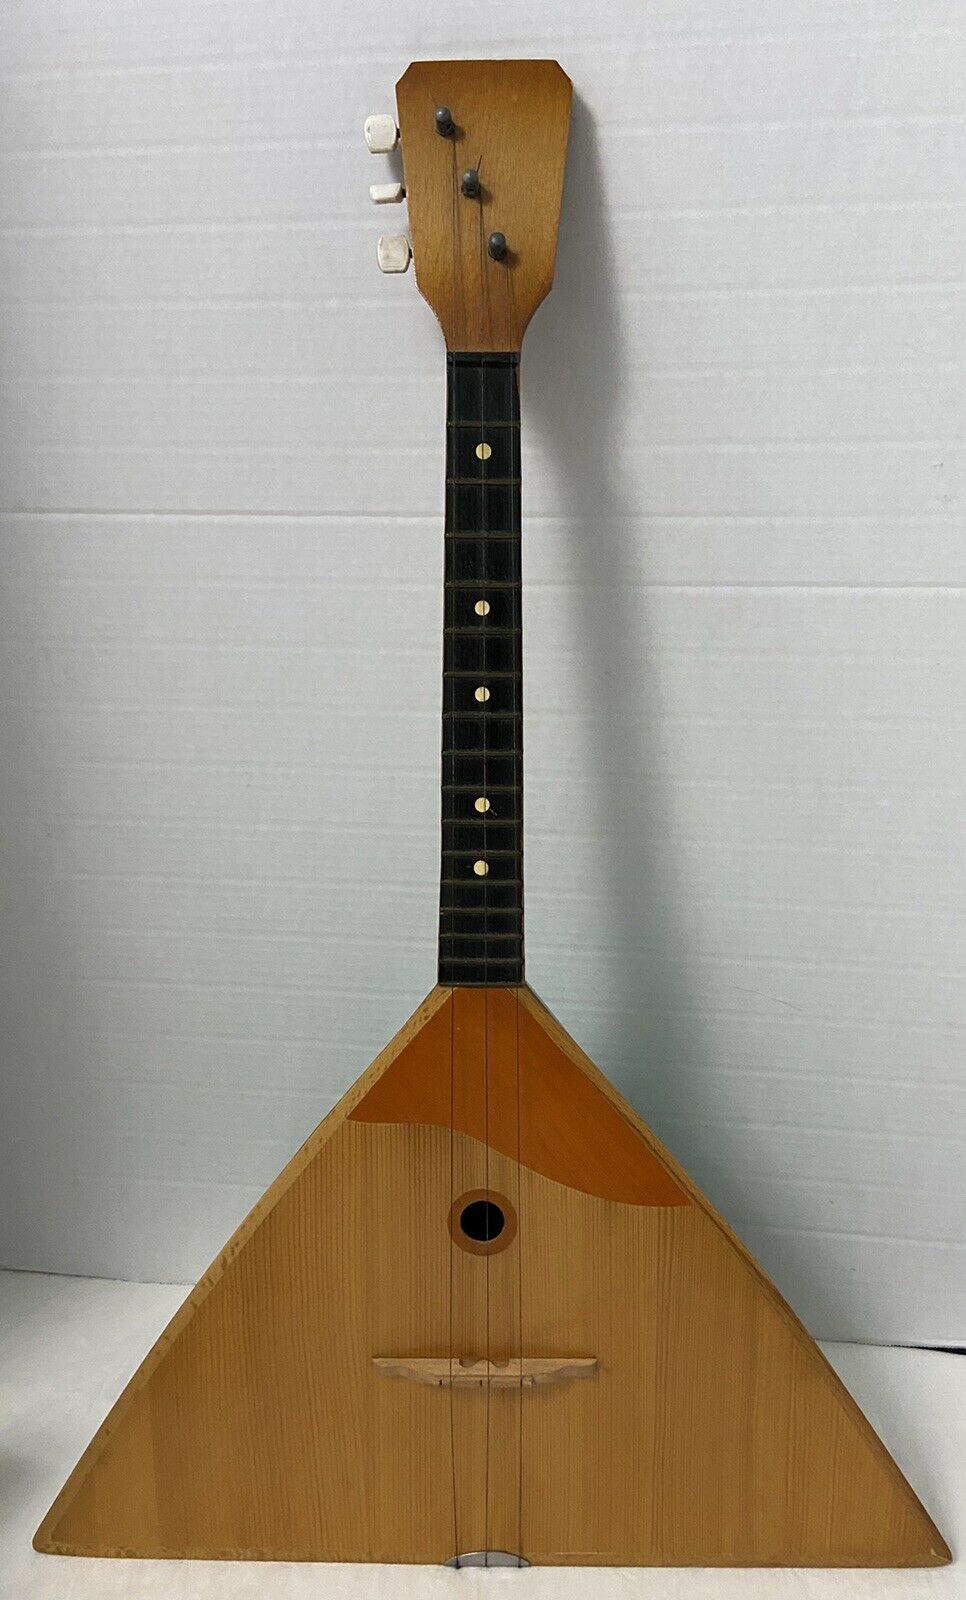 Vintage Russian Balalaika Triangular Wood 3 String Guitar Dated 1975